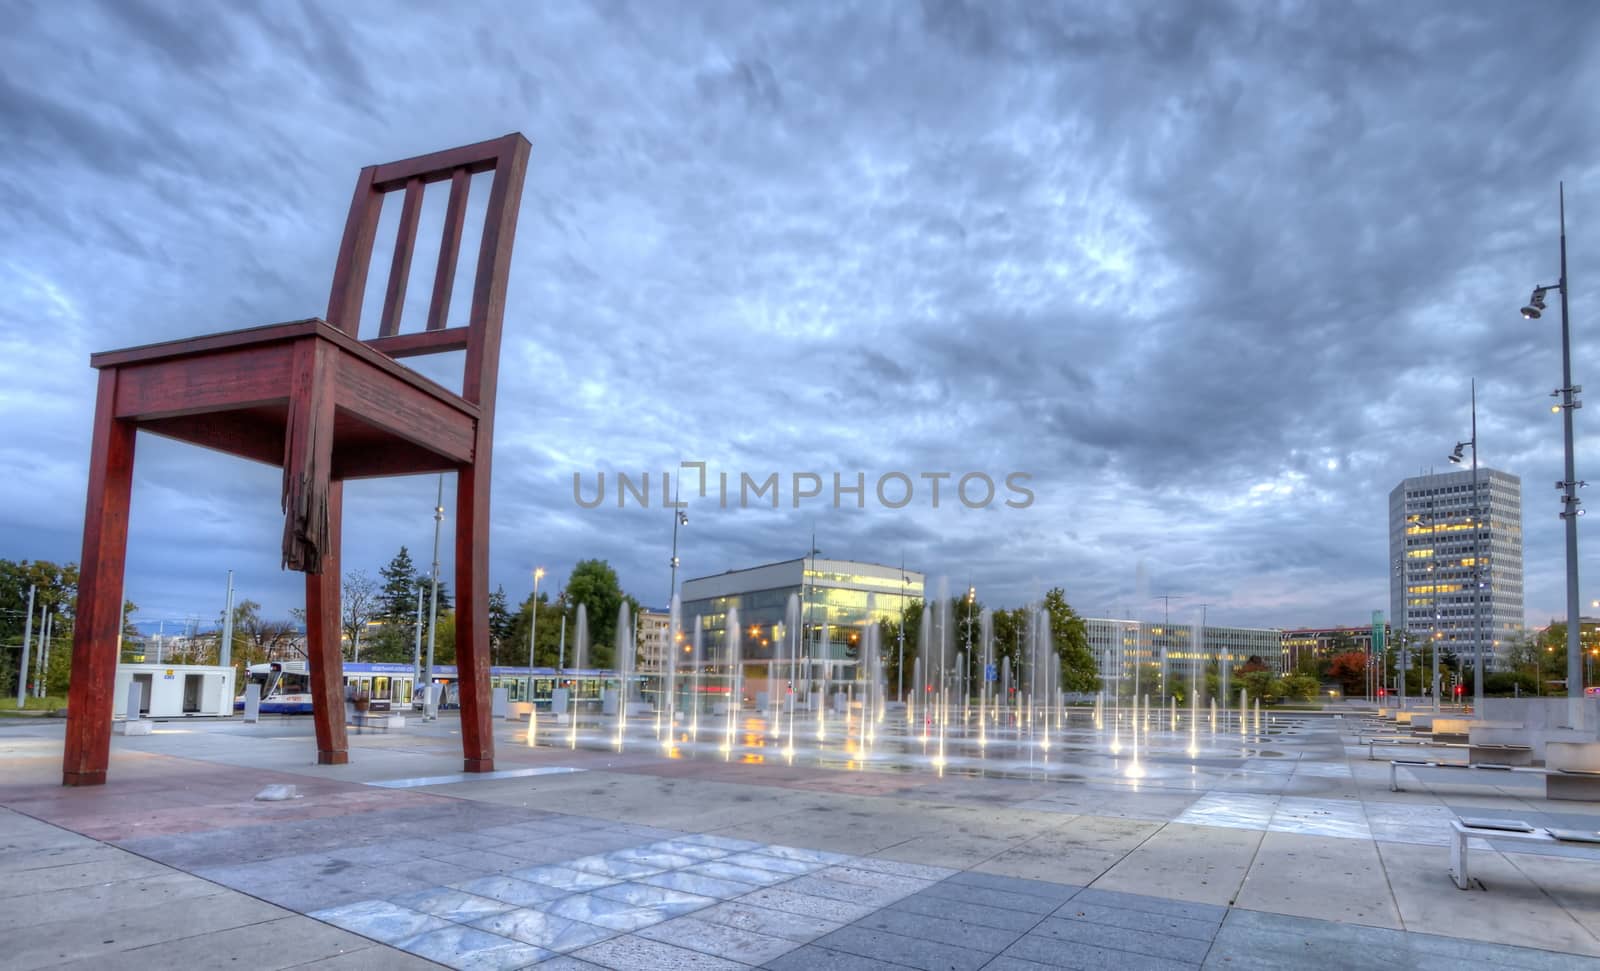 United-Nations place, Geneva, Switzerland, HDR by Elenaphotos21